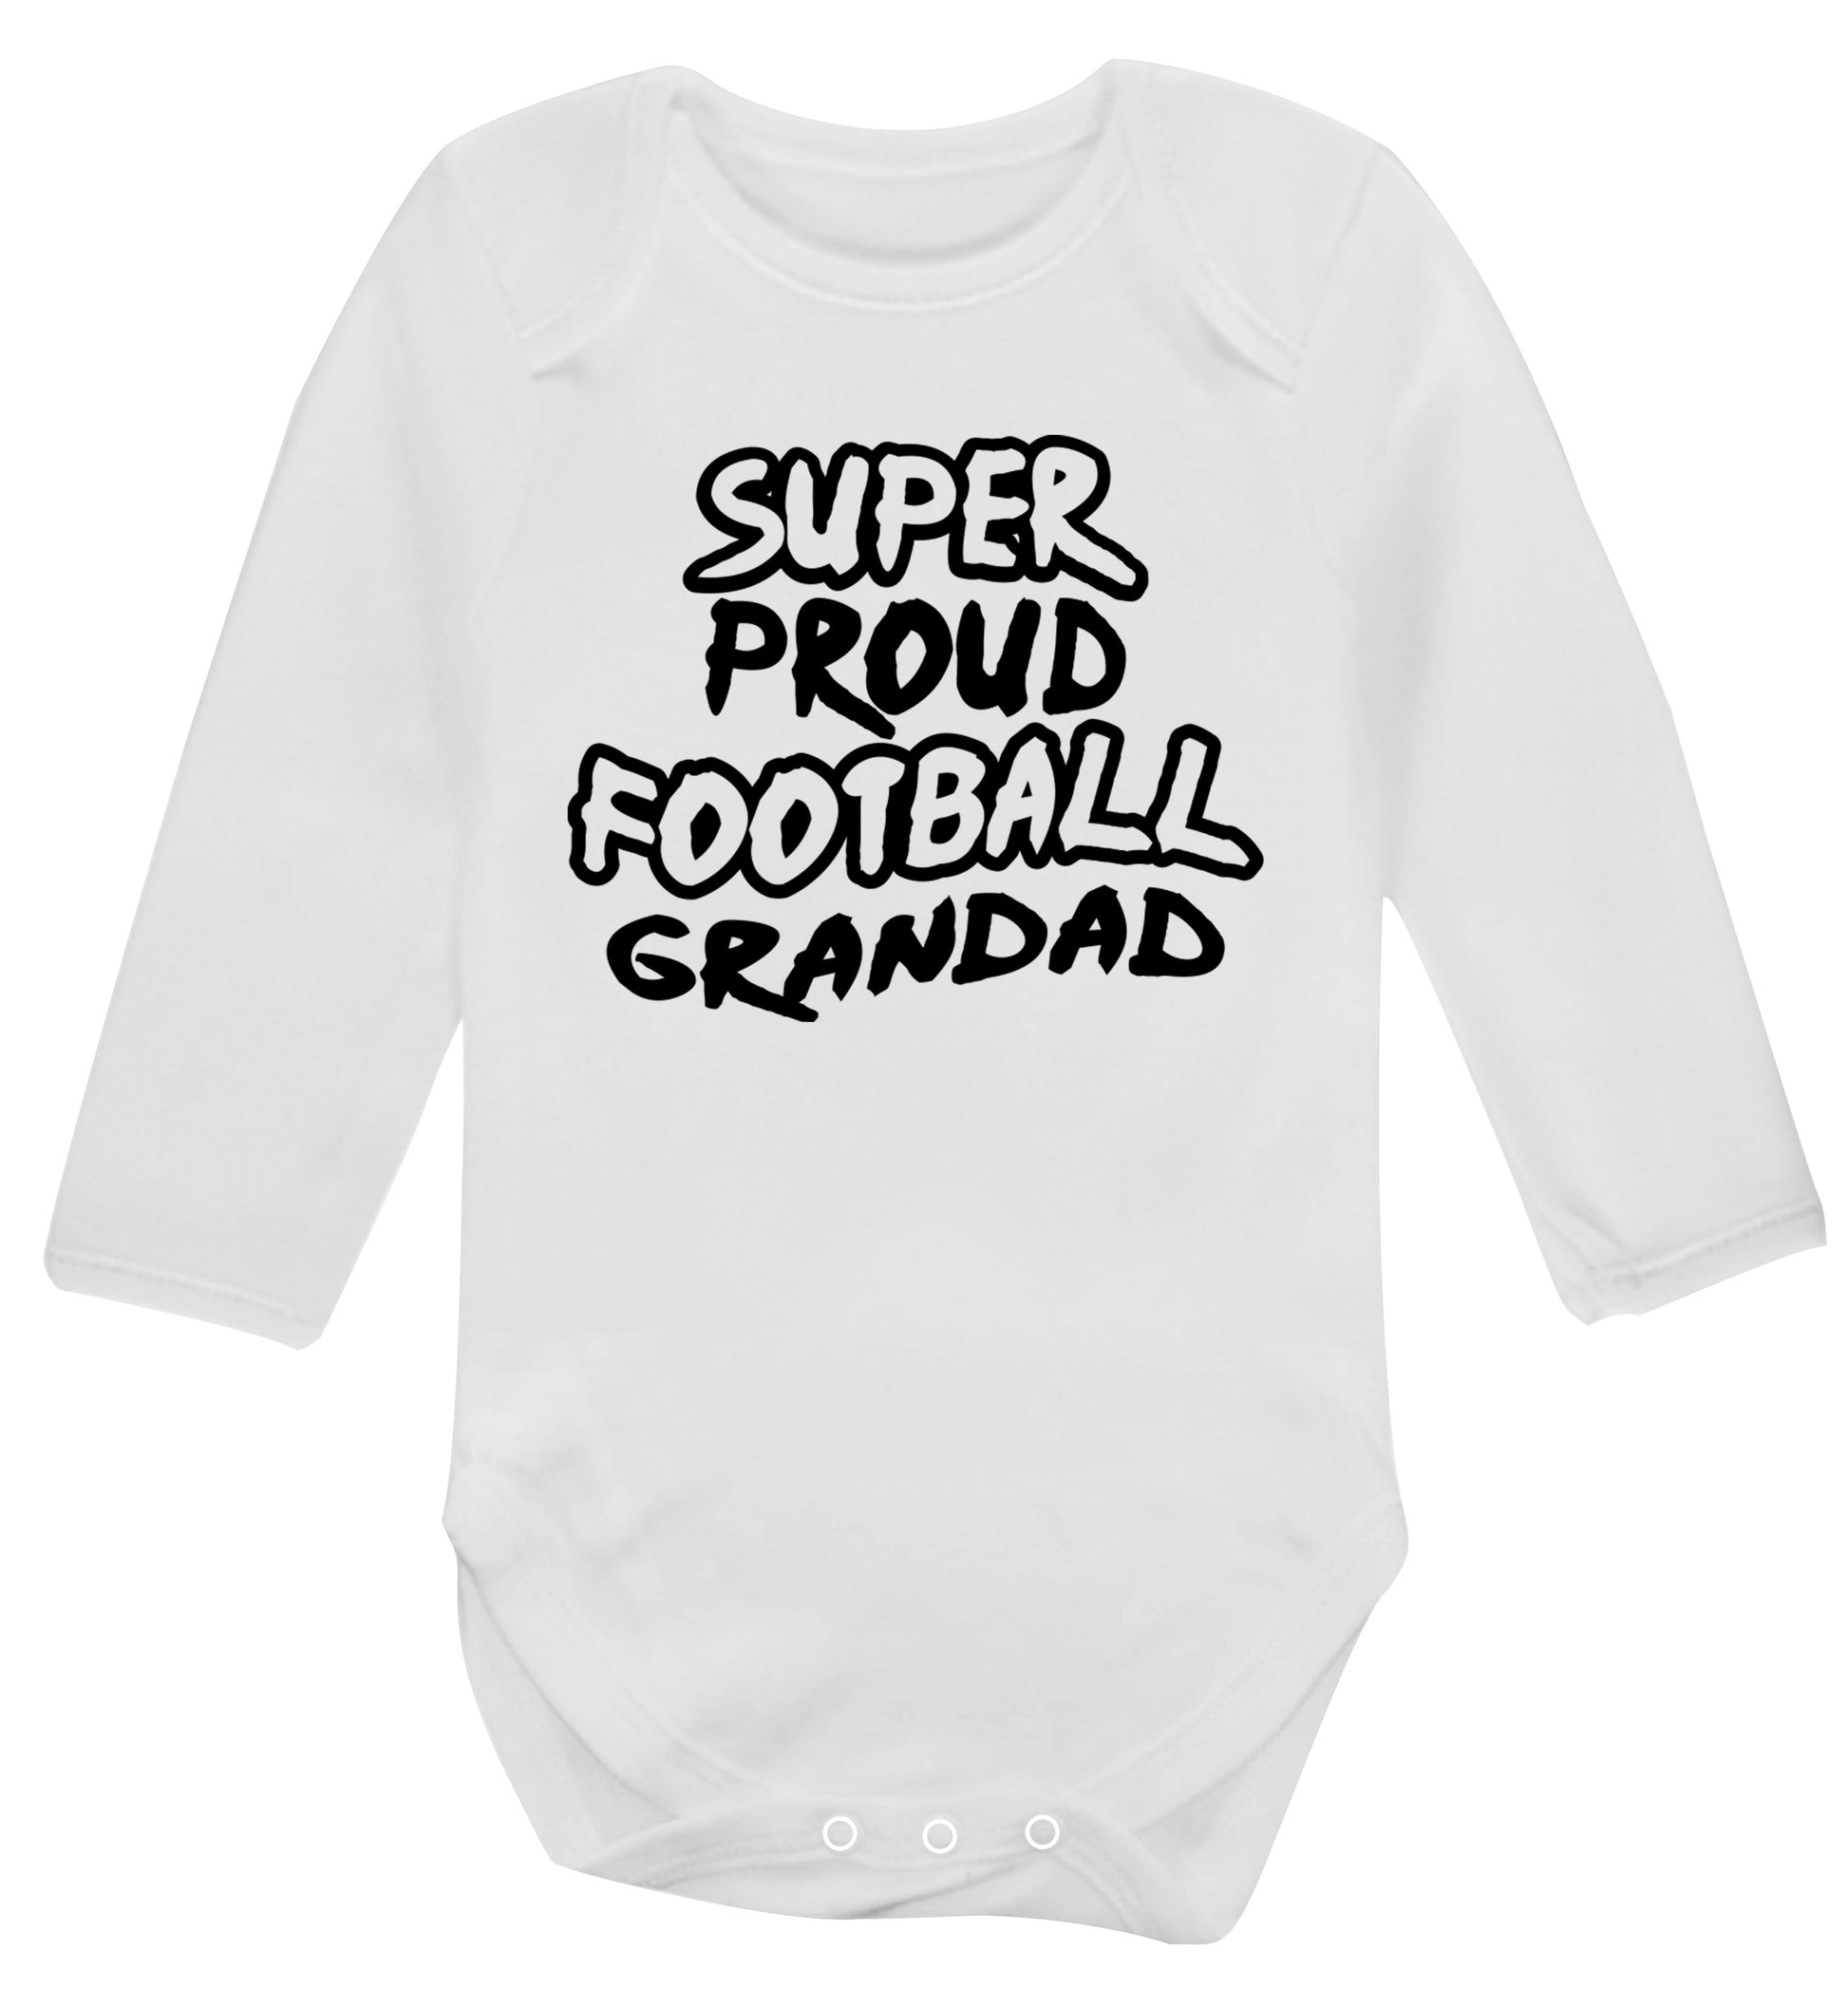 Super proud football grandad Baby Vest long sleeved white 6-12 months